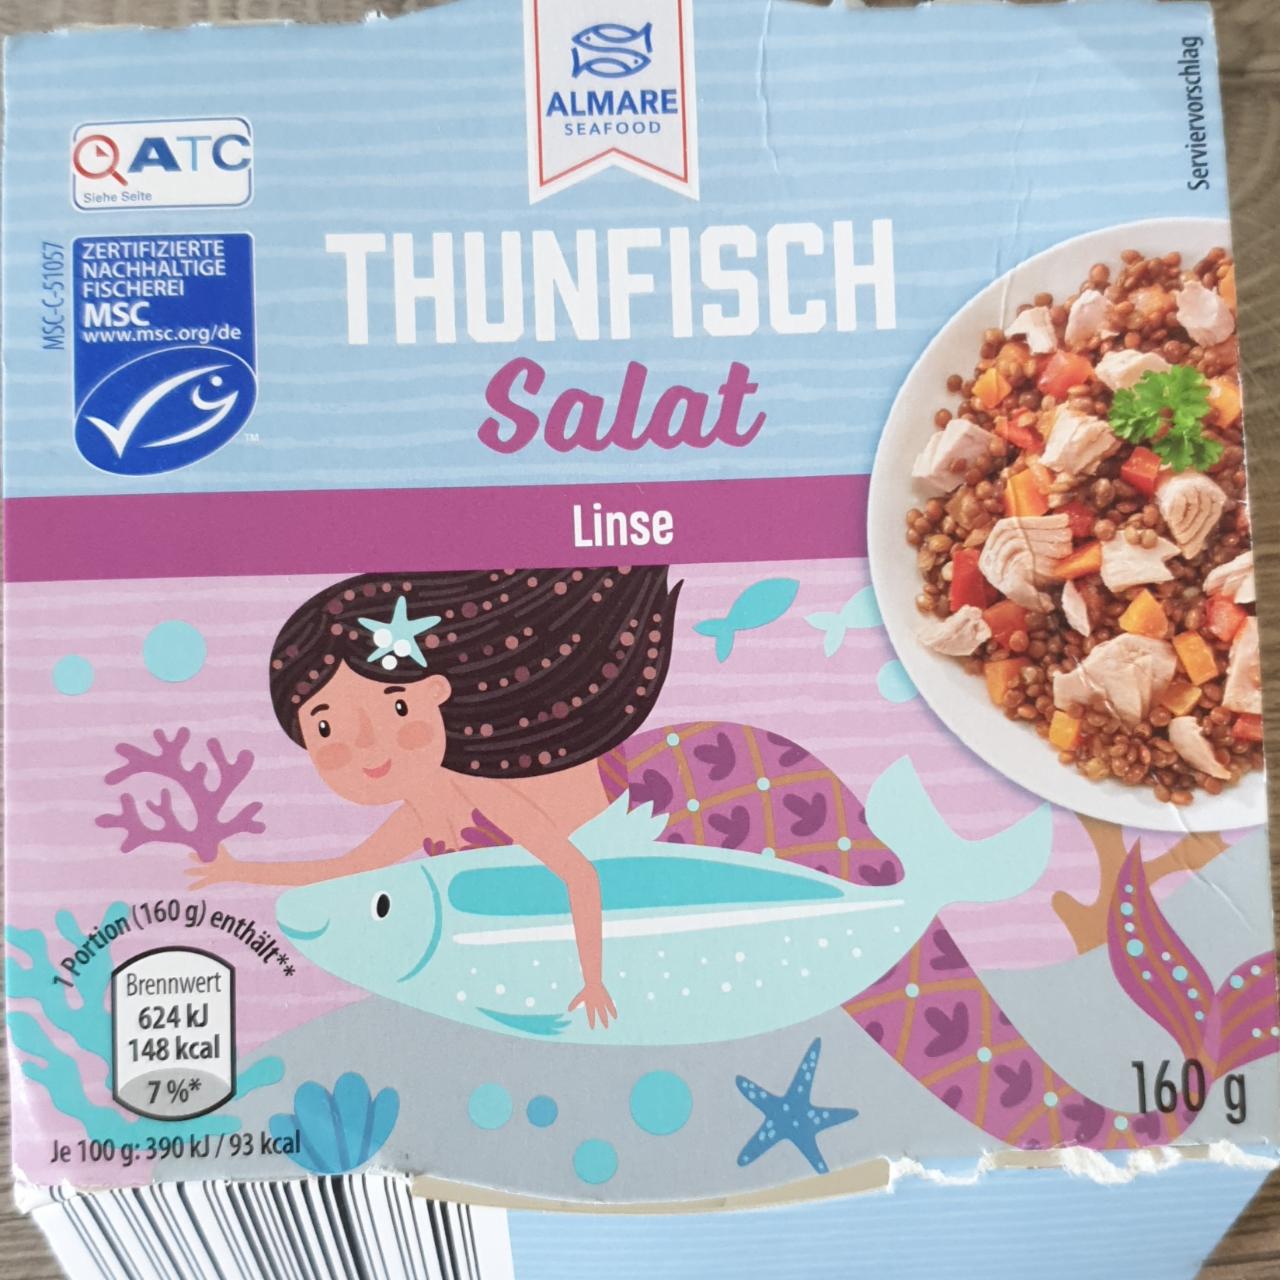 Fotografie - Thunfisch Salat Linse Almare Seafood